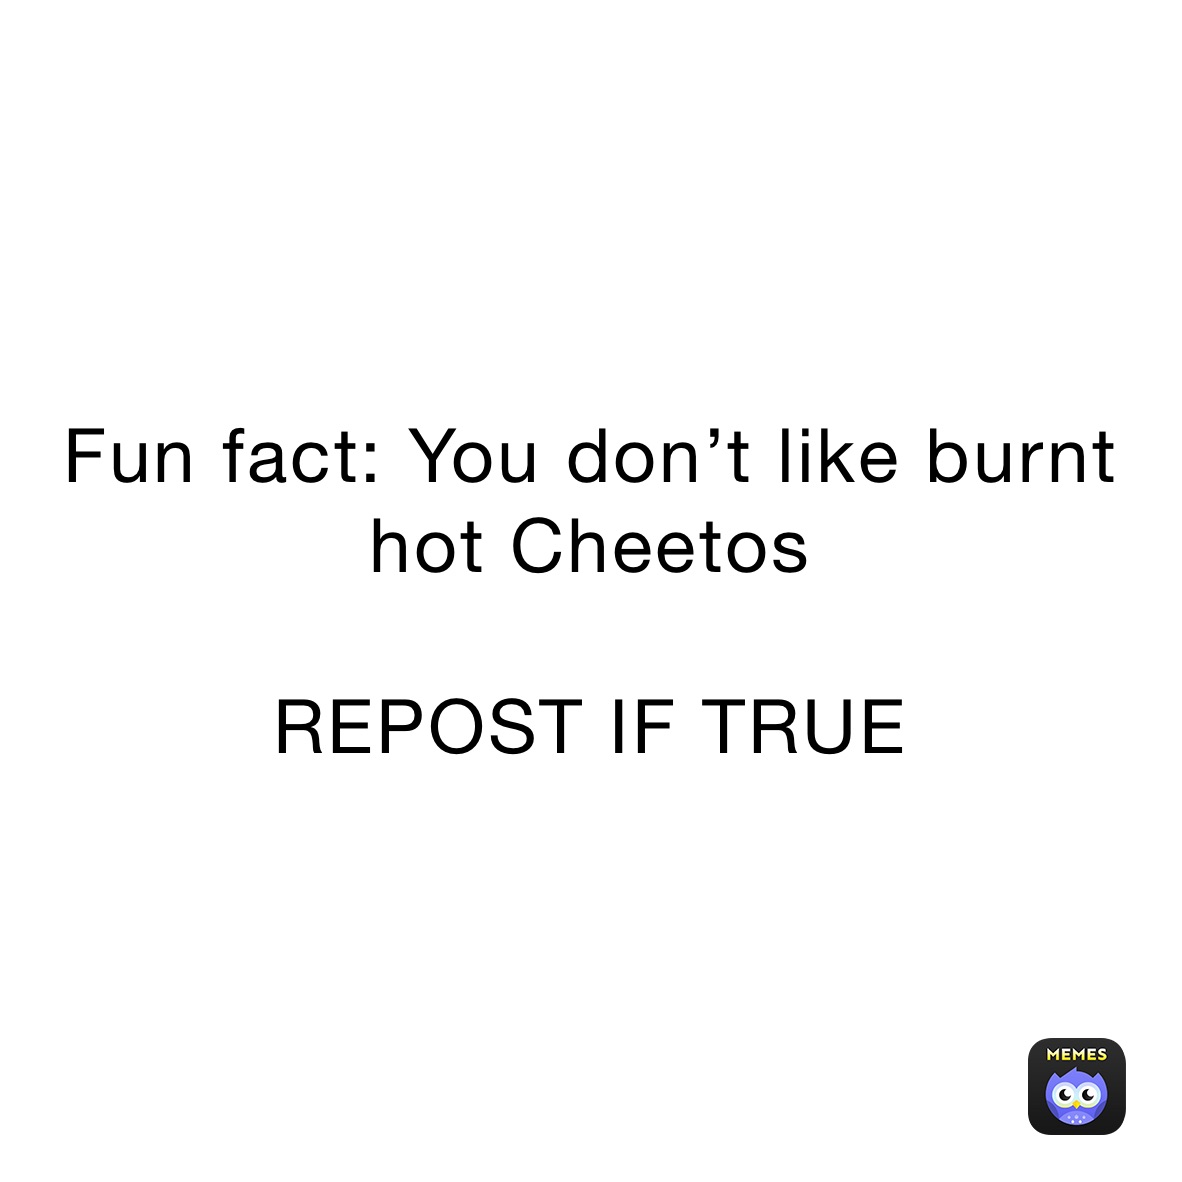 Fun fact: You don’t like burnt hot Cheetos

REPOST IF TRUE